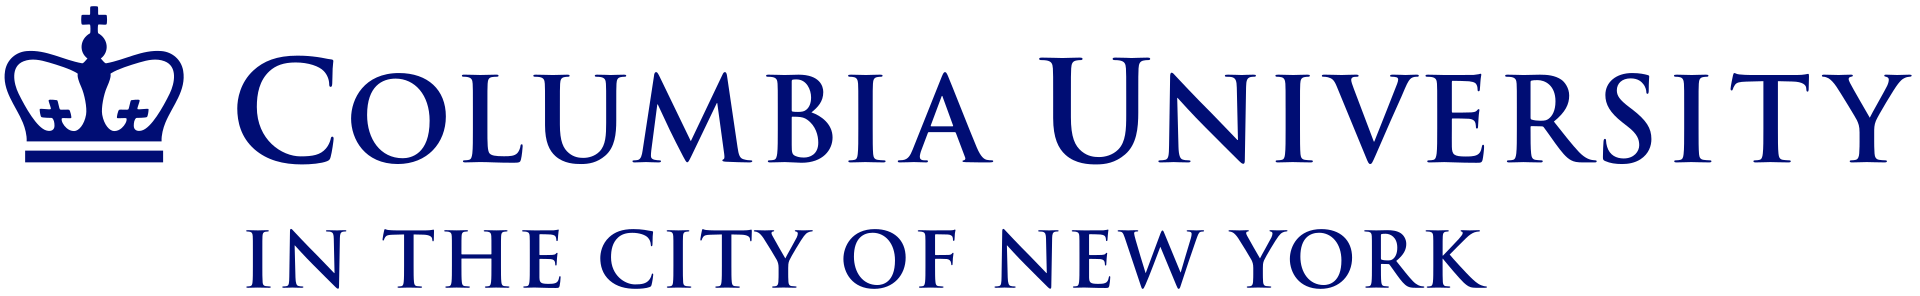 1920px-Columbia_University_logo.svg